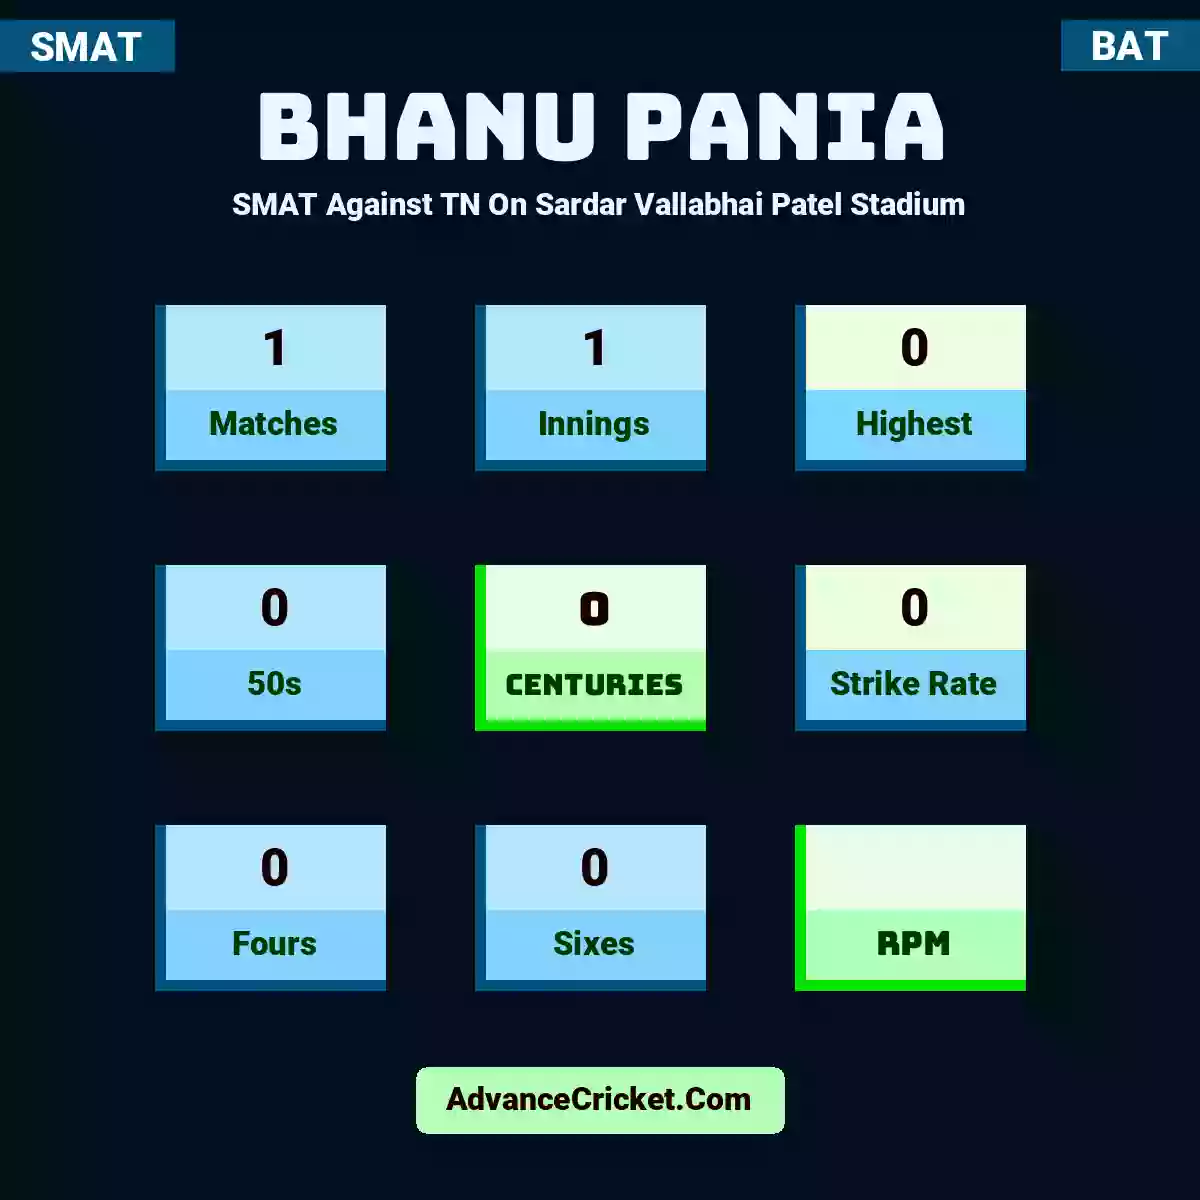 Bhanu Pania SMAT  Against TN On Sardar Vallabhai Patel Stadium, Bhanu Pania played 1 matches, scored 0 runs as highest, 0 half-centuries, and 0 centuries, with a strike rate of 0. B.Pania hit 0 fours and 0 sixes.